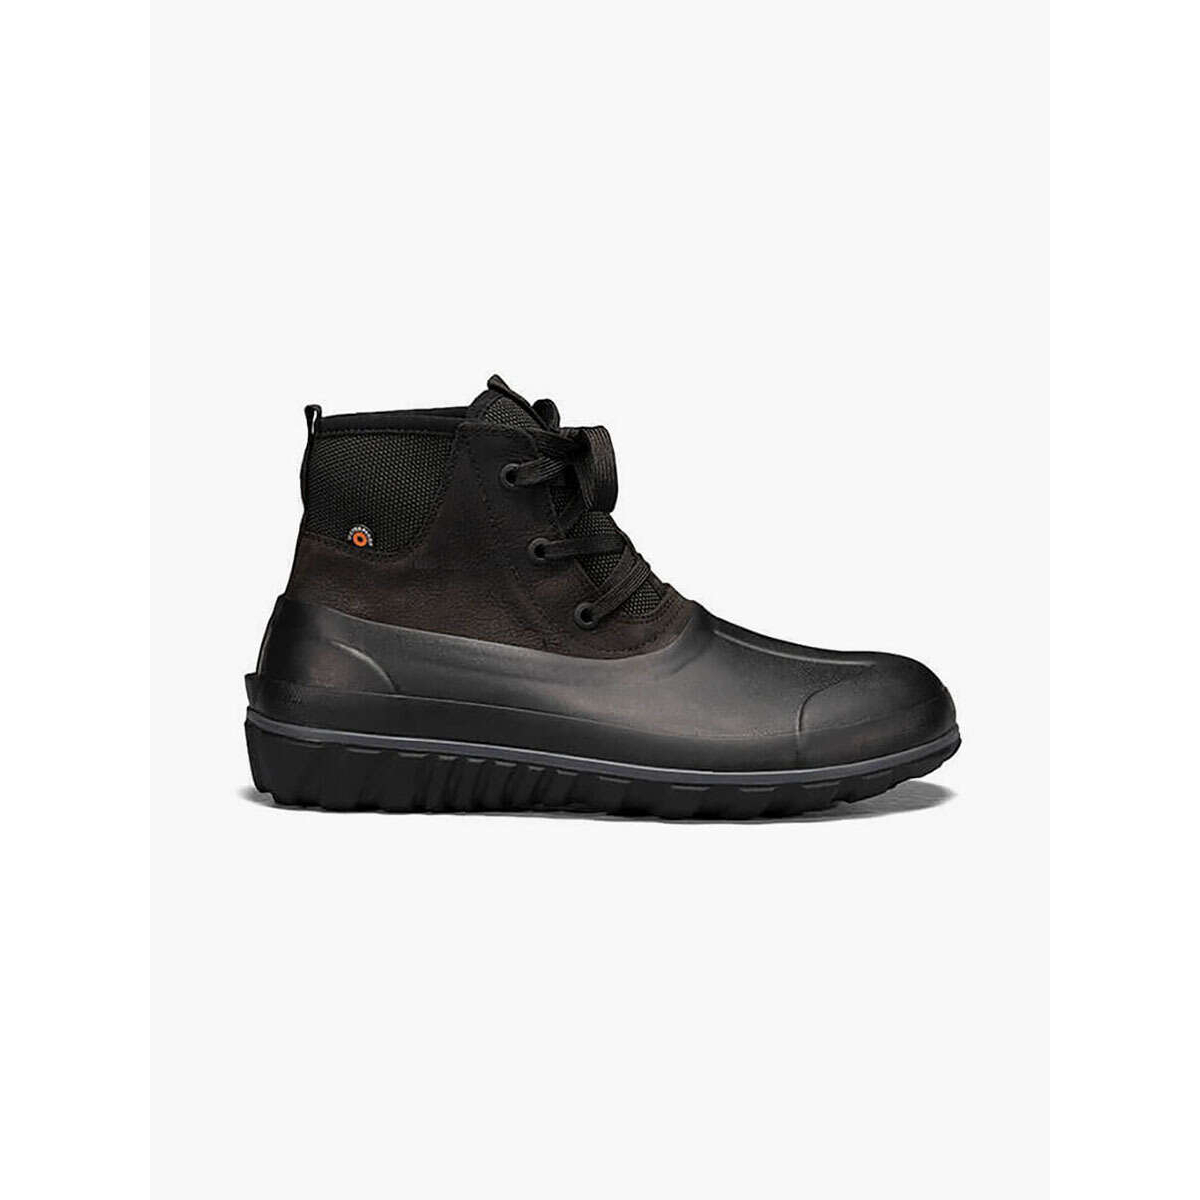 BOGS Men's Casual Lace Waterproof Leather Snow Boots Black - 72620-001 001 Black - 001 Black, 14-M